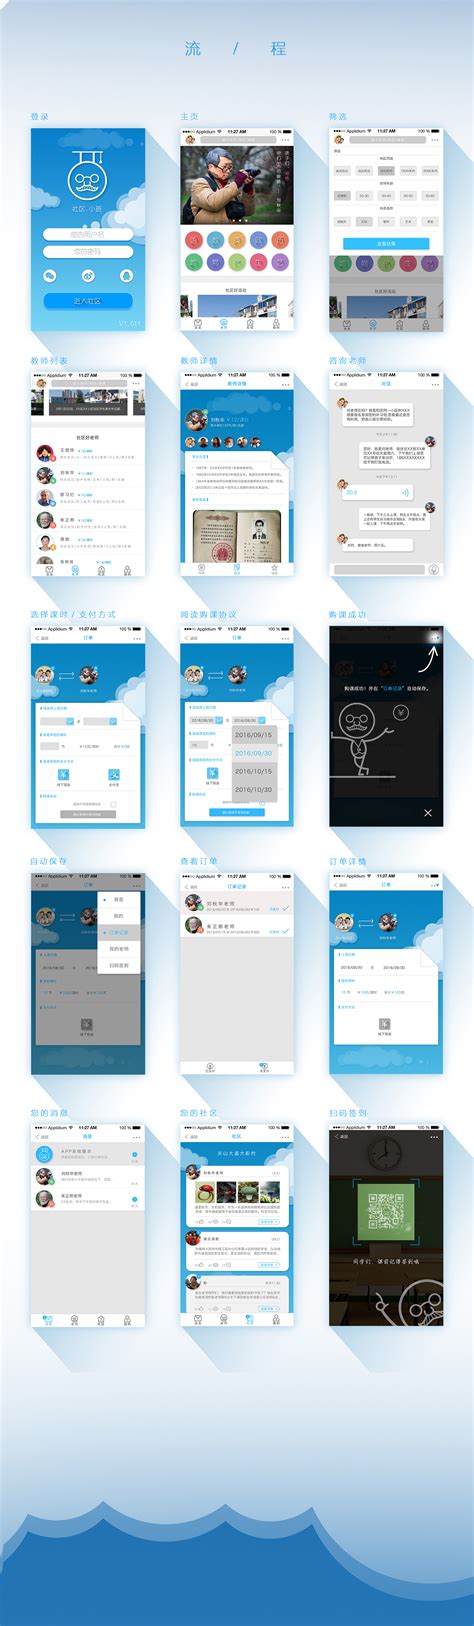 Smart Home App UI Design | Search by Muzli